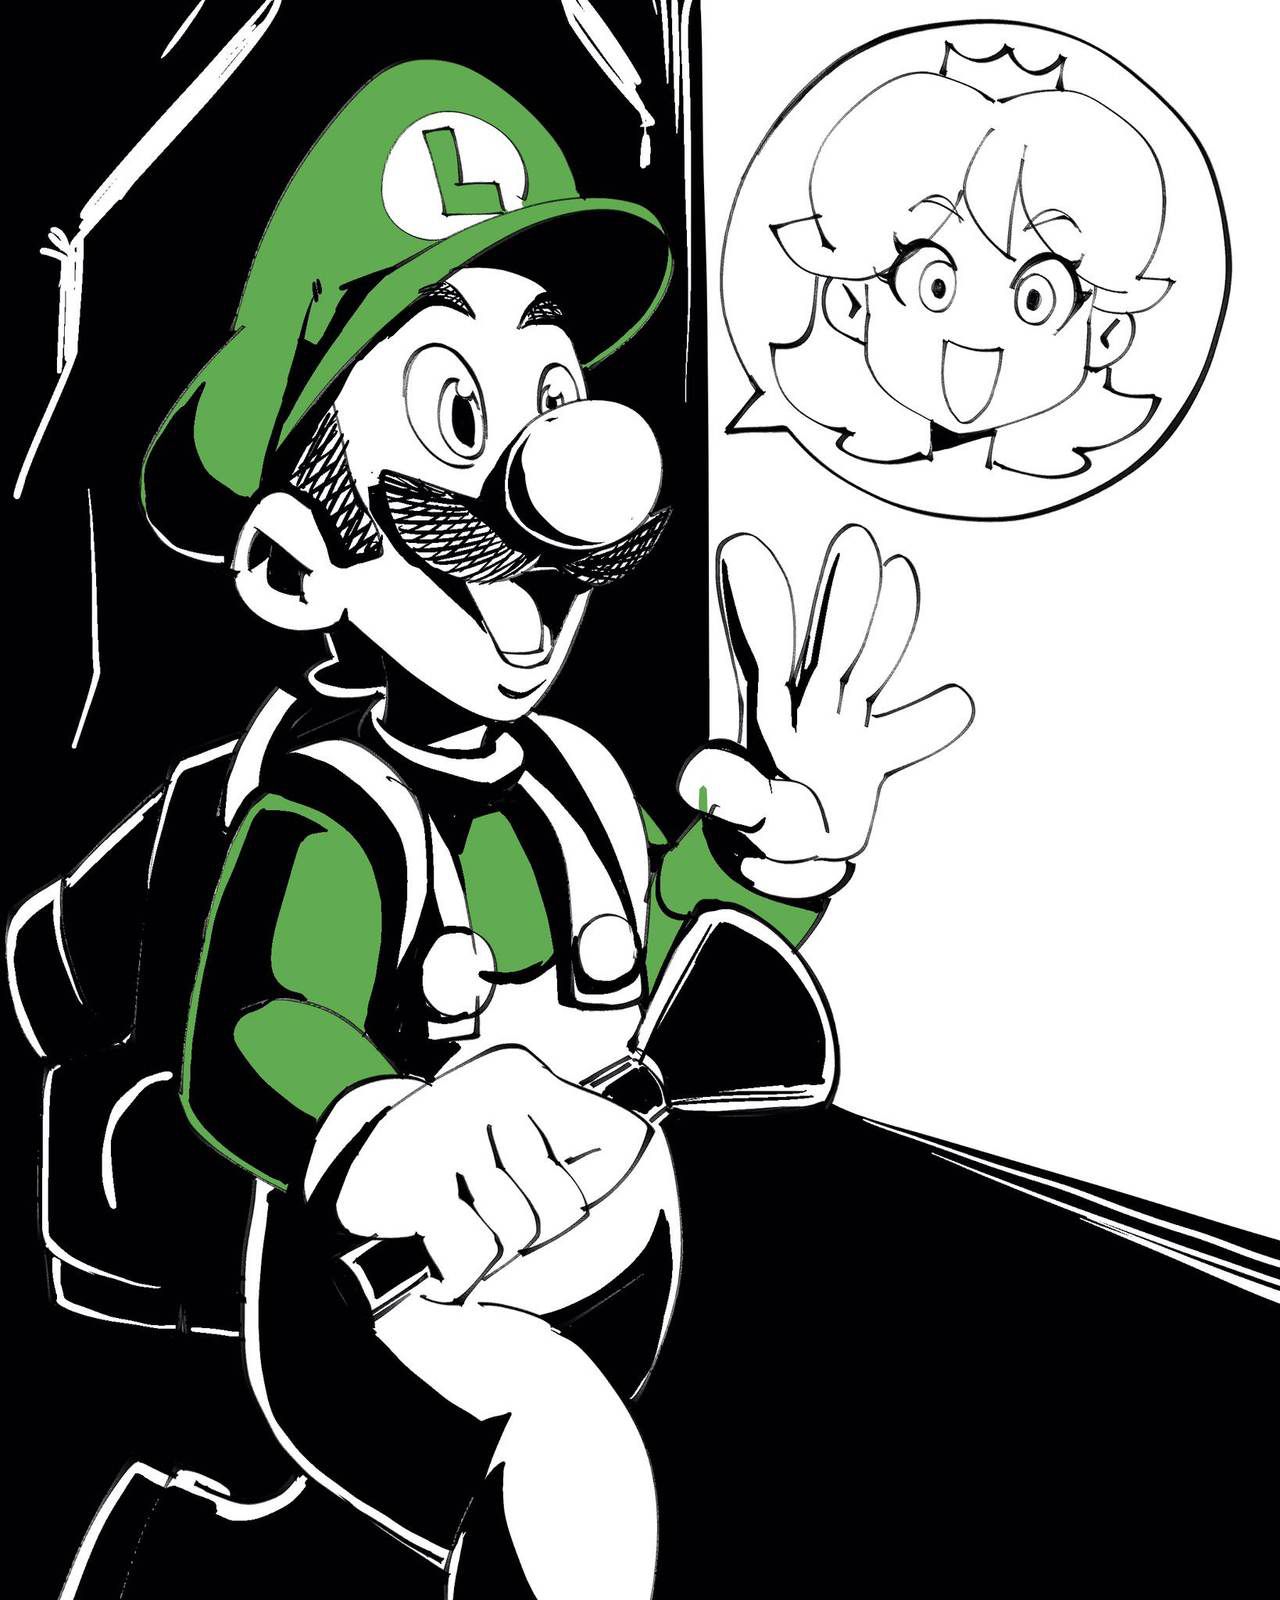 [Nisego] Inktober 2 - Luigi's Mansion (Super Mario Bros.) [Ongoing] 10